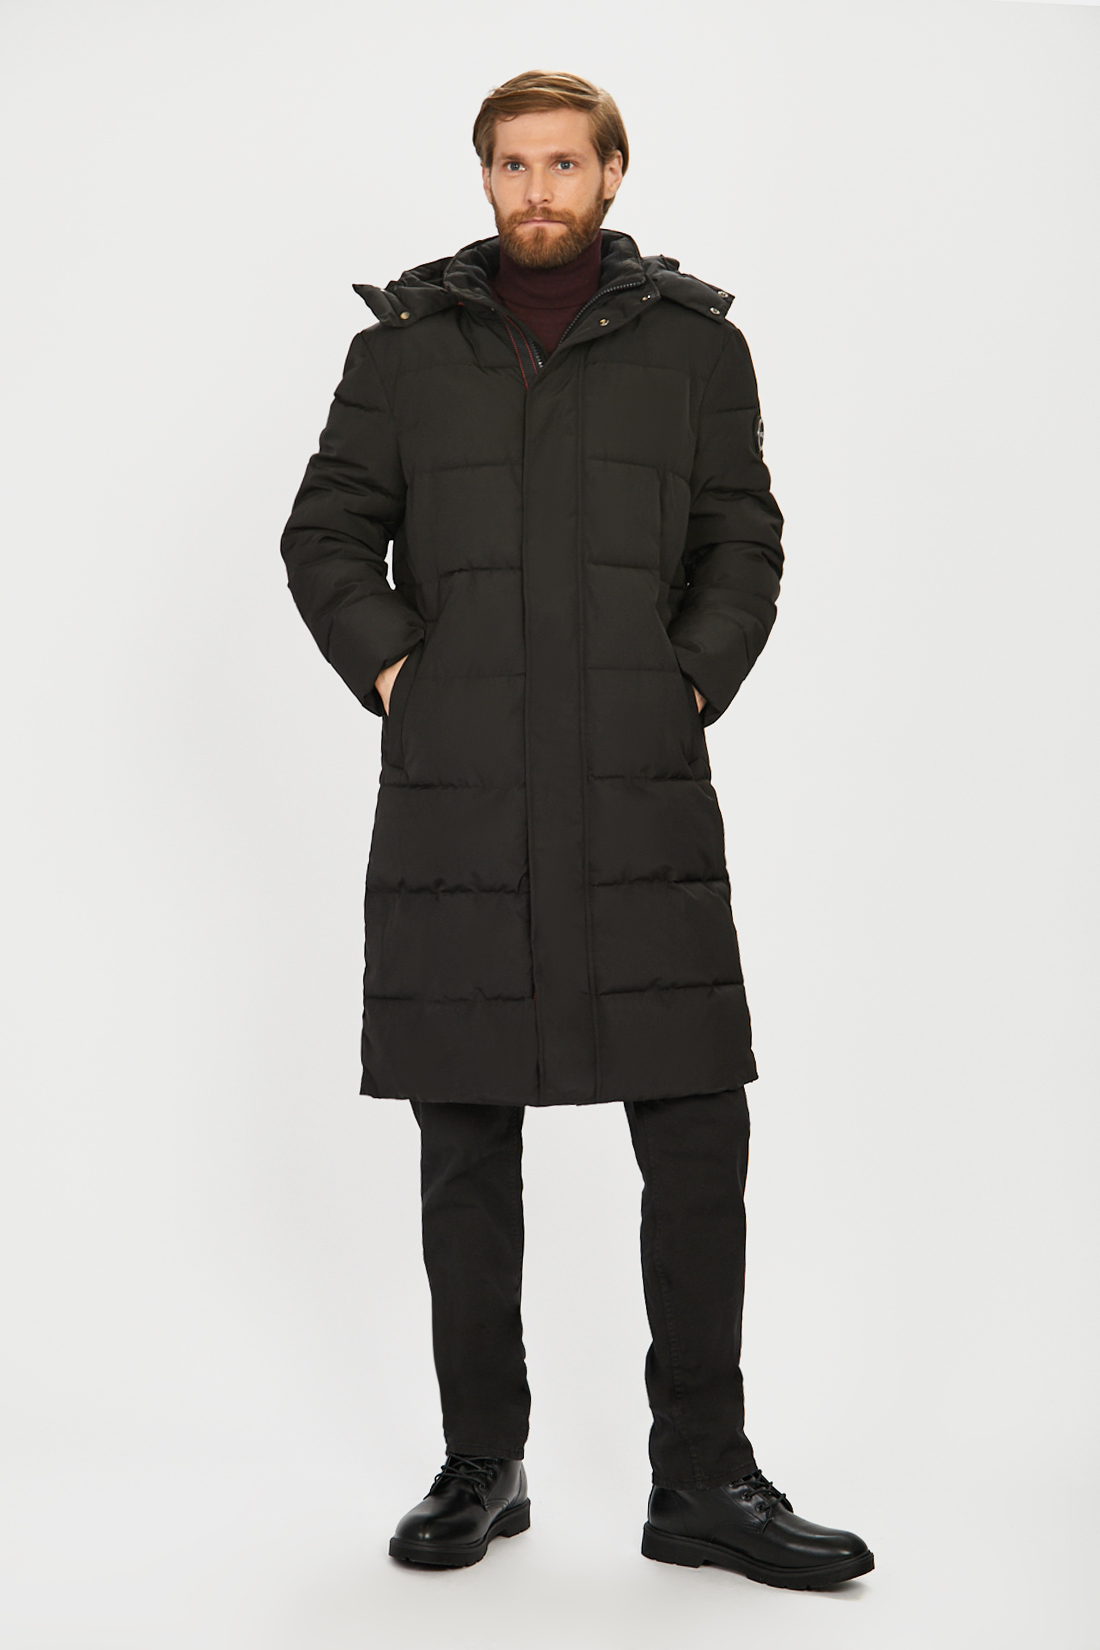 Куртка (Эко пух) (арт. baon B541506), размер S, цвет черный Куртка (Эко пух) (арт. baon B541506) - фото 1